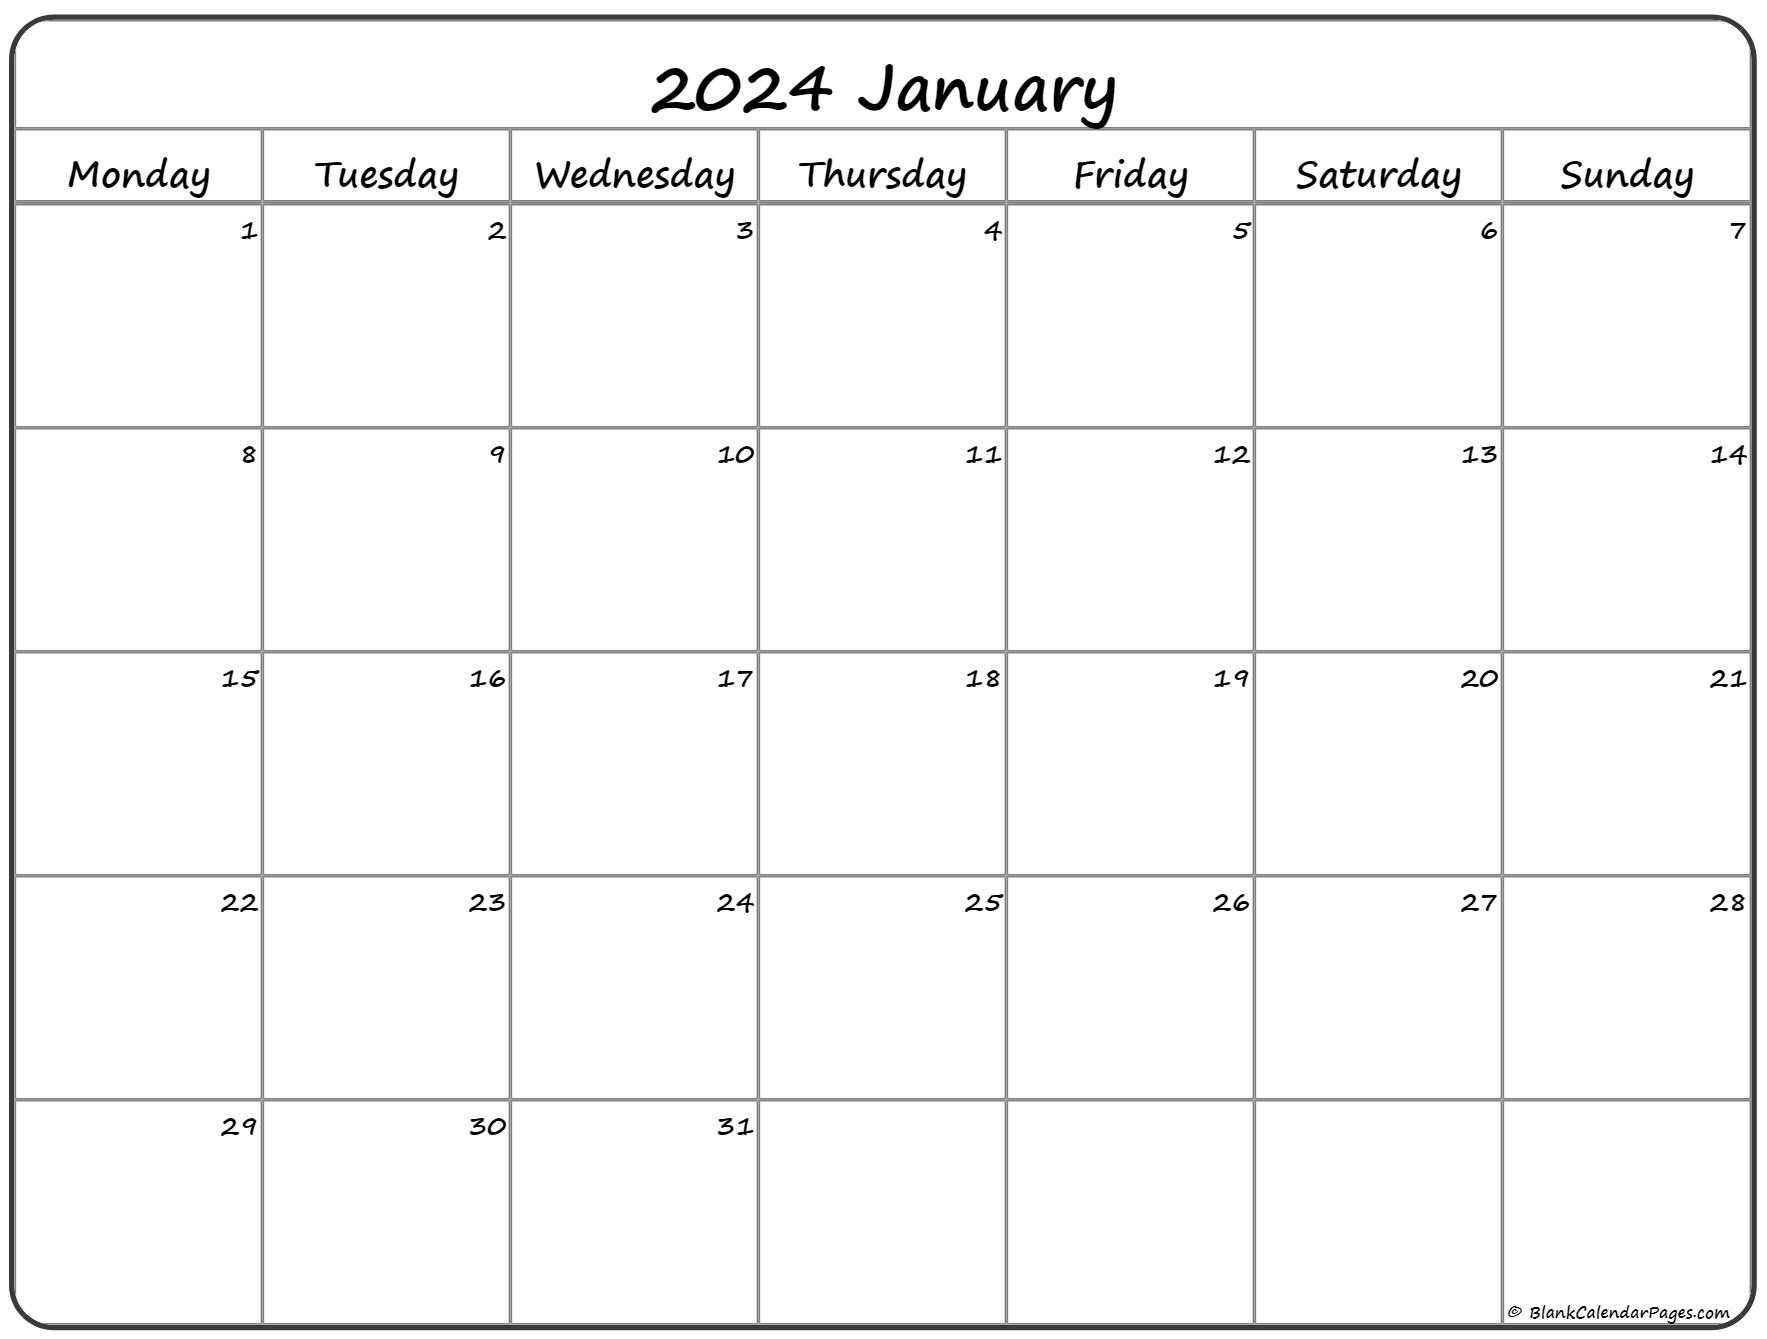 calendar-2024-monday-start-easy-to-use-calendar-app-2024